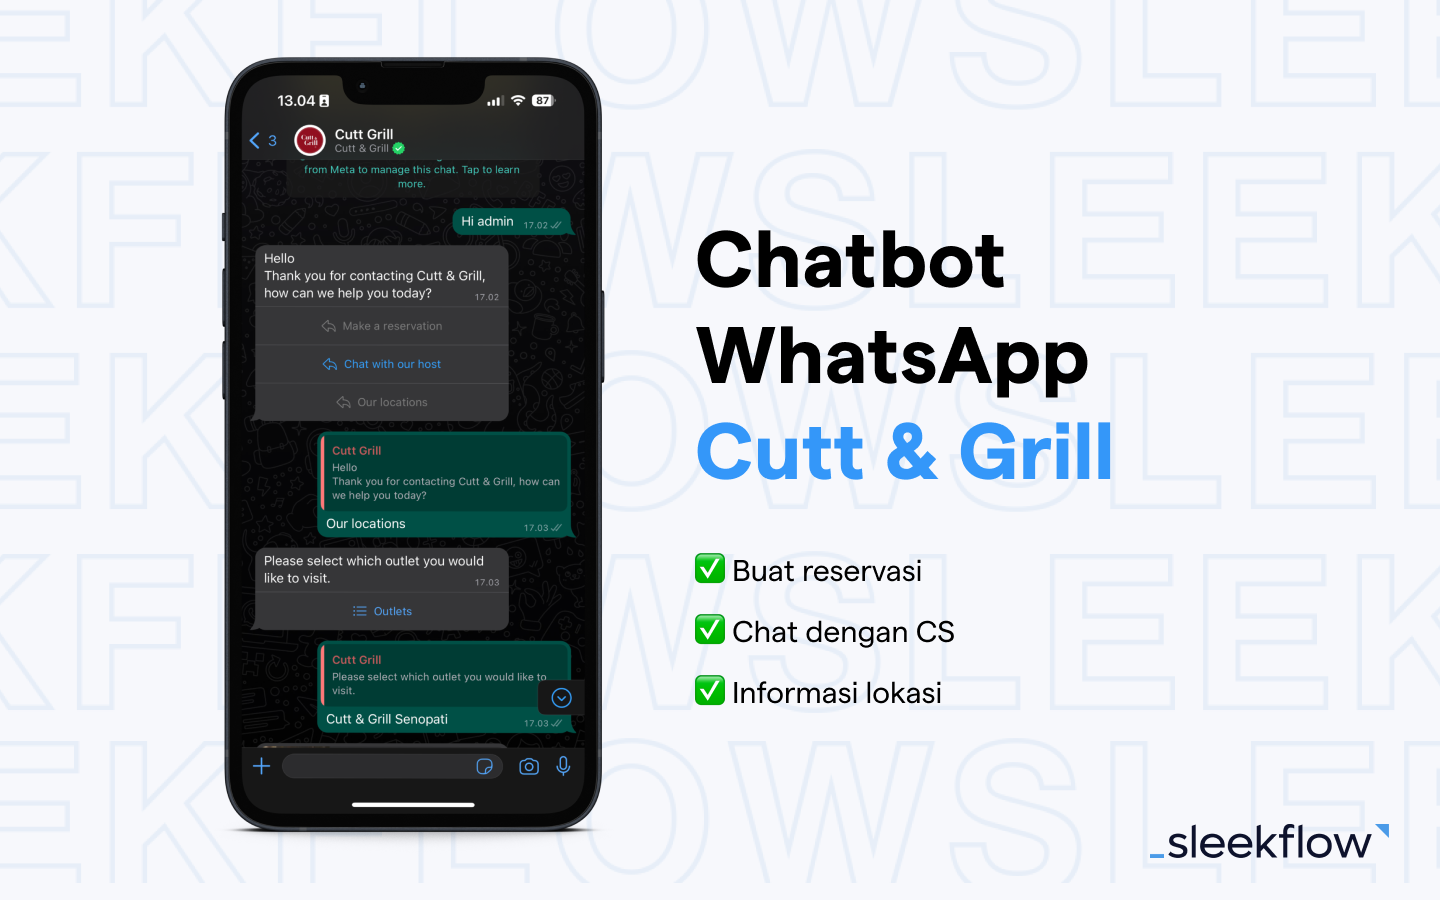 Chatbot WhatsApp Cutt & Grill